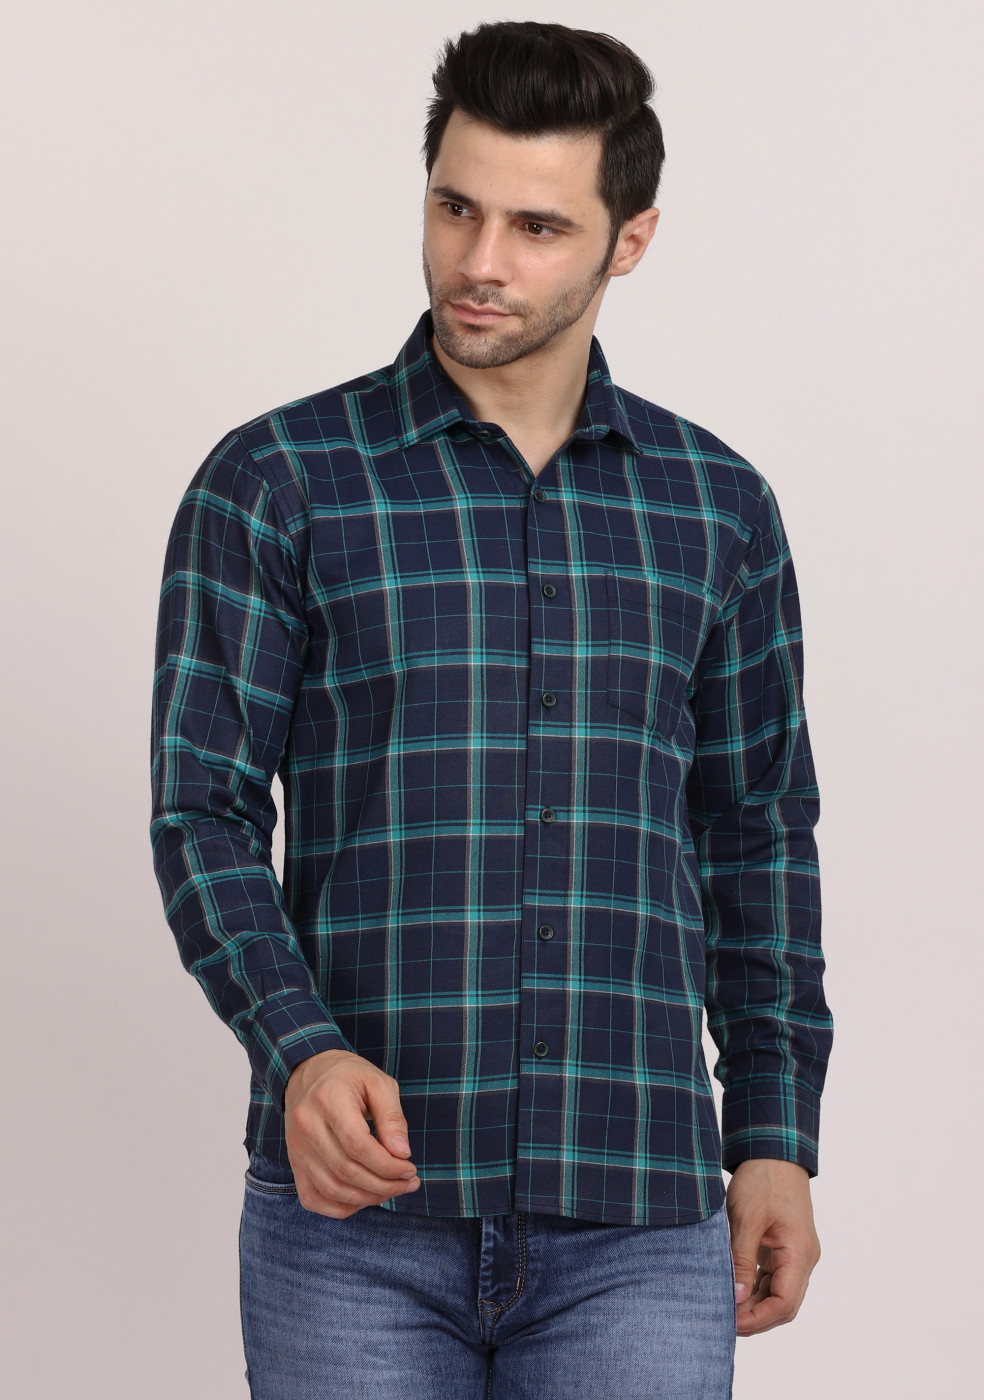 ASHTOM Navy Green Mix Check Regular Fit Cotton Shirt For Men